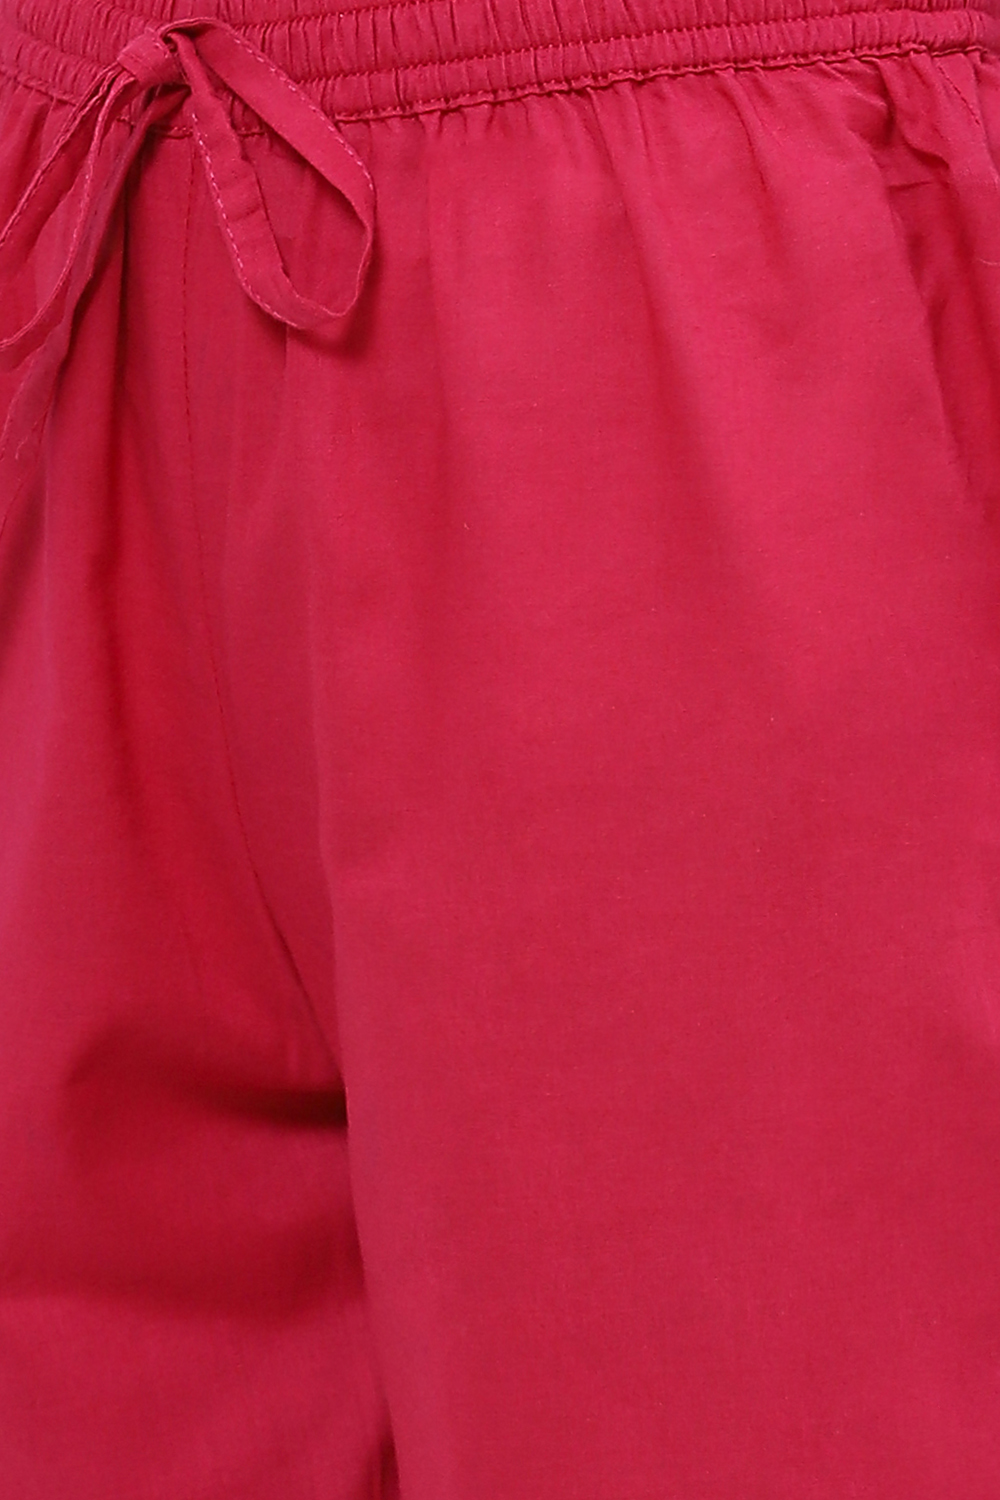 Berry Pink Viscose Girls Anarkali Straight Kurta Palazzo Suit Set image number 3